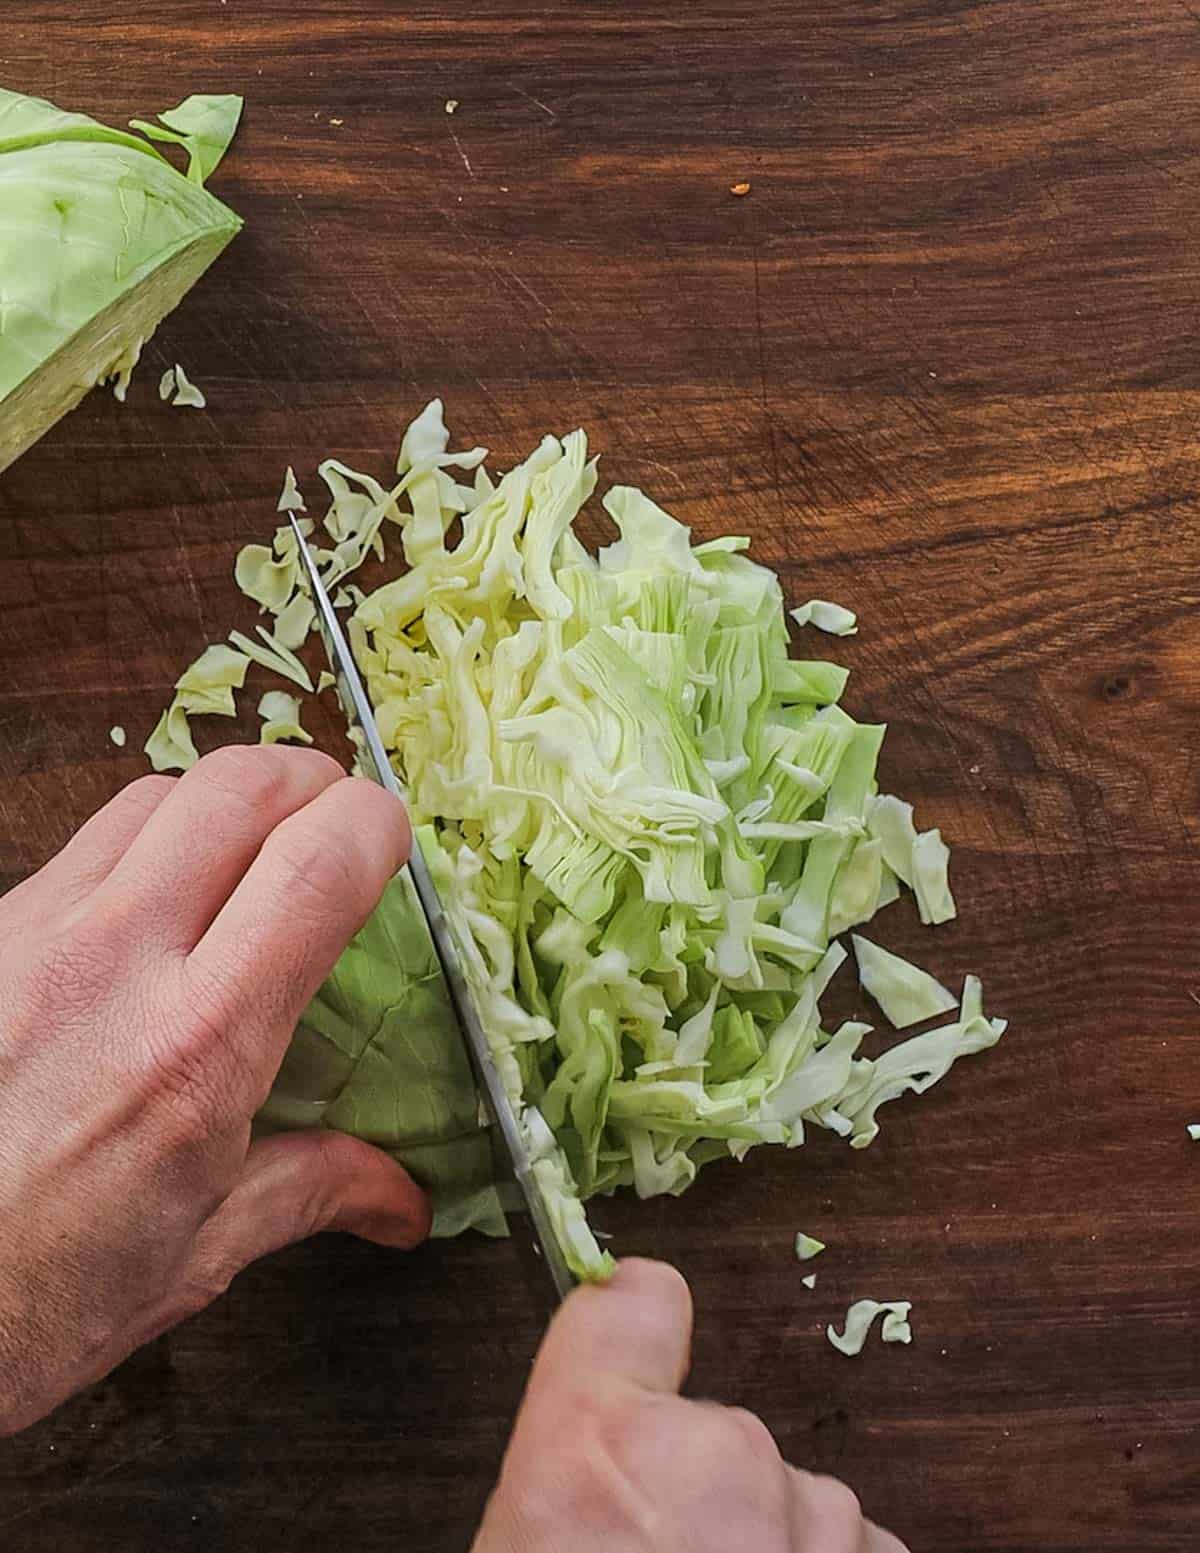 Shredding cabbages for sauerkraut using a chefs knife. 